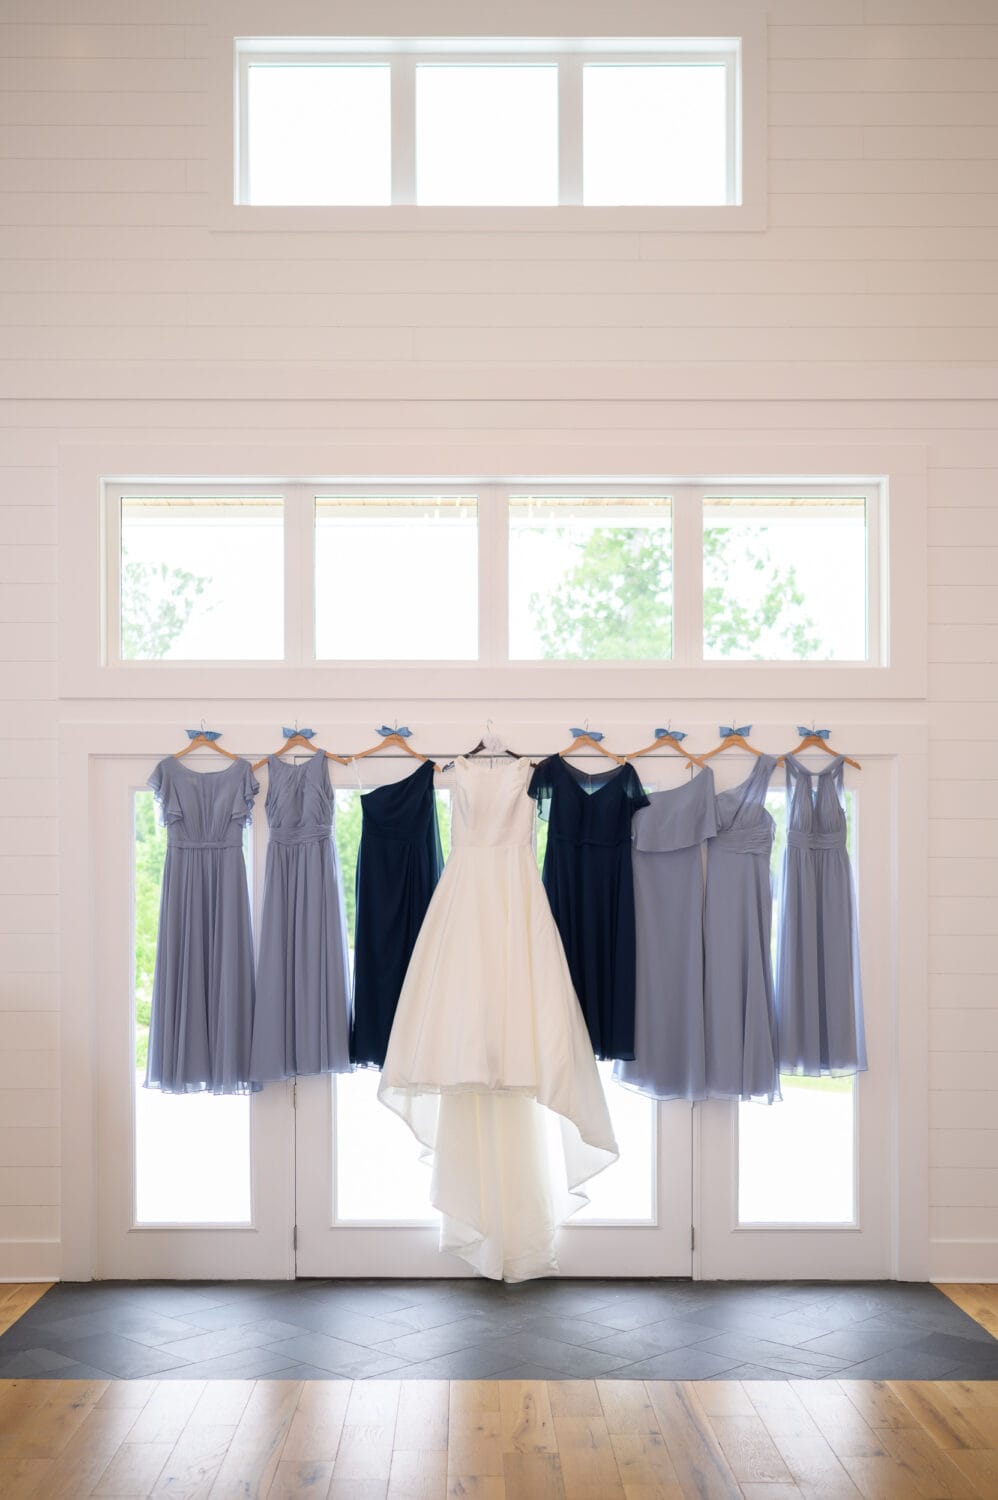 Dresses hanging in the windowlight  - The Venue at White Oaks Farm